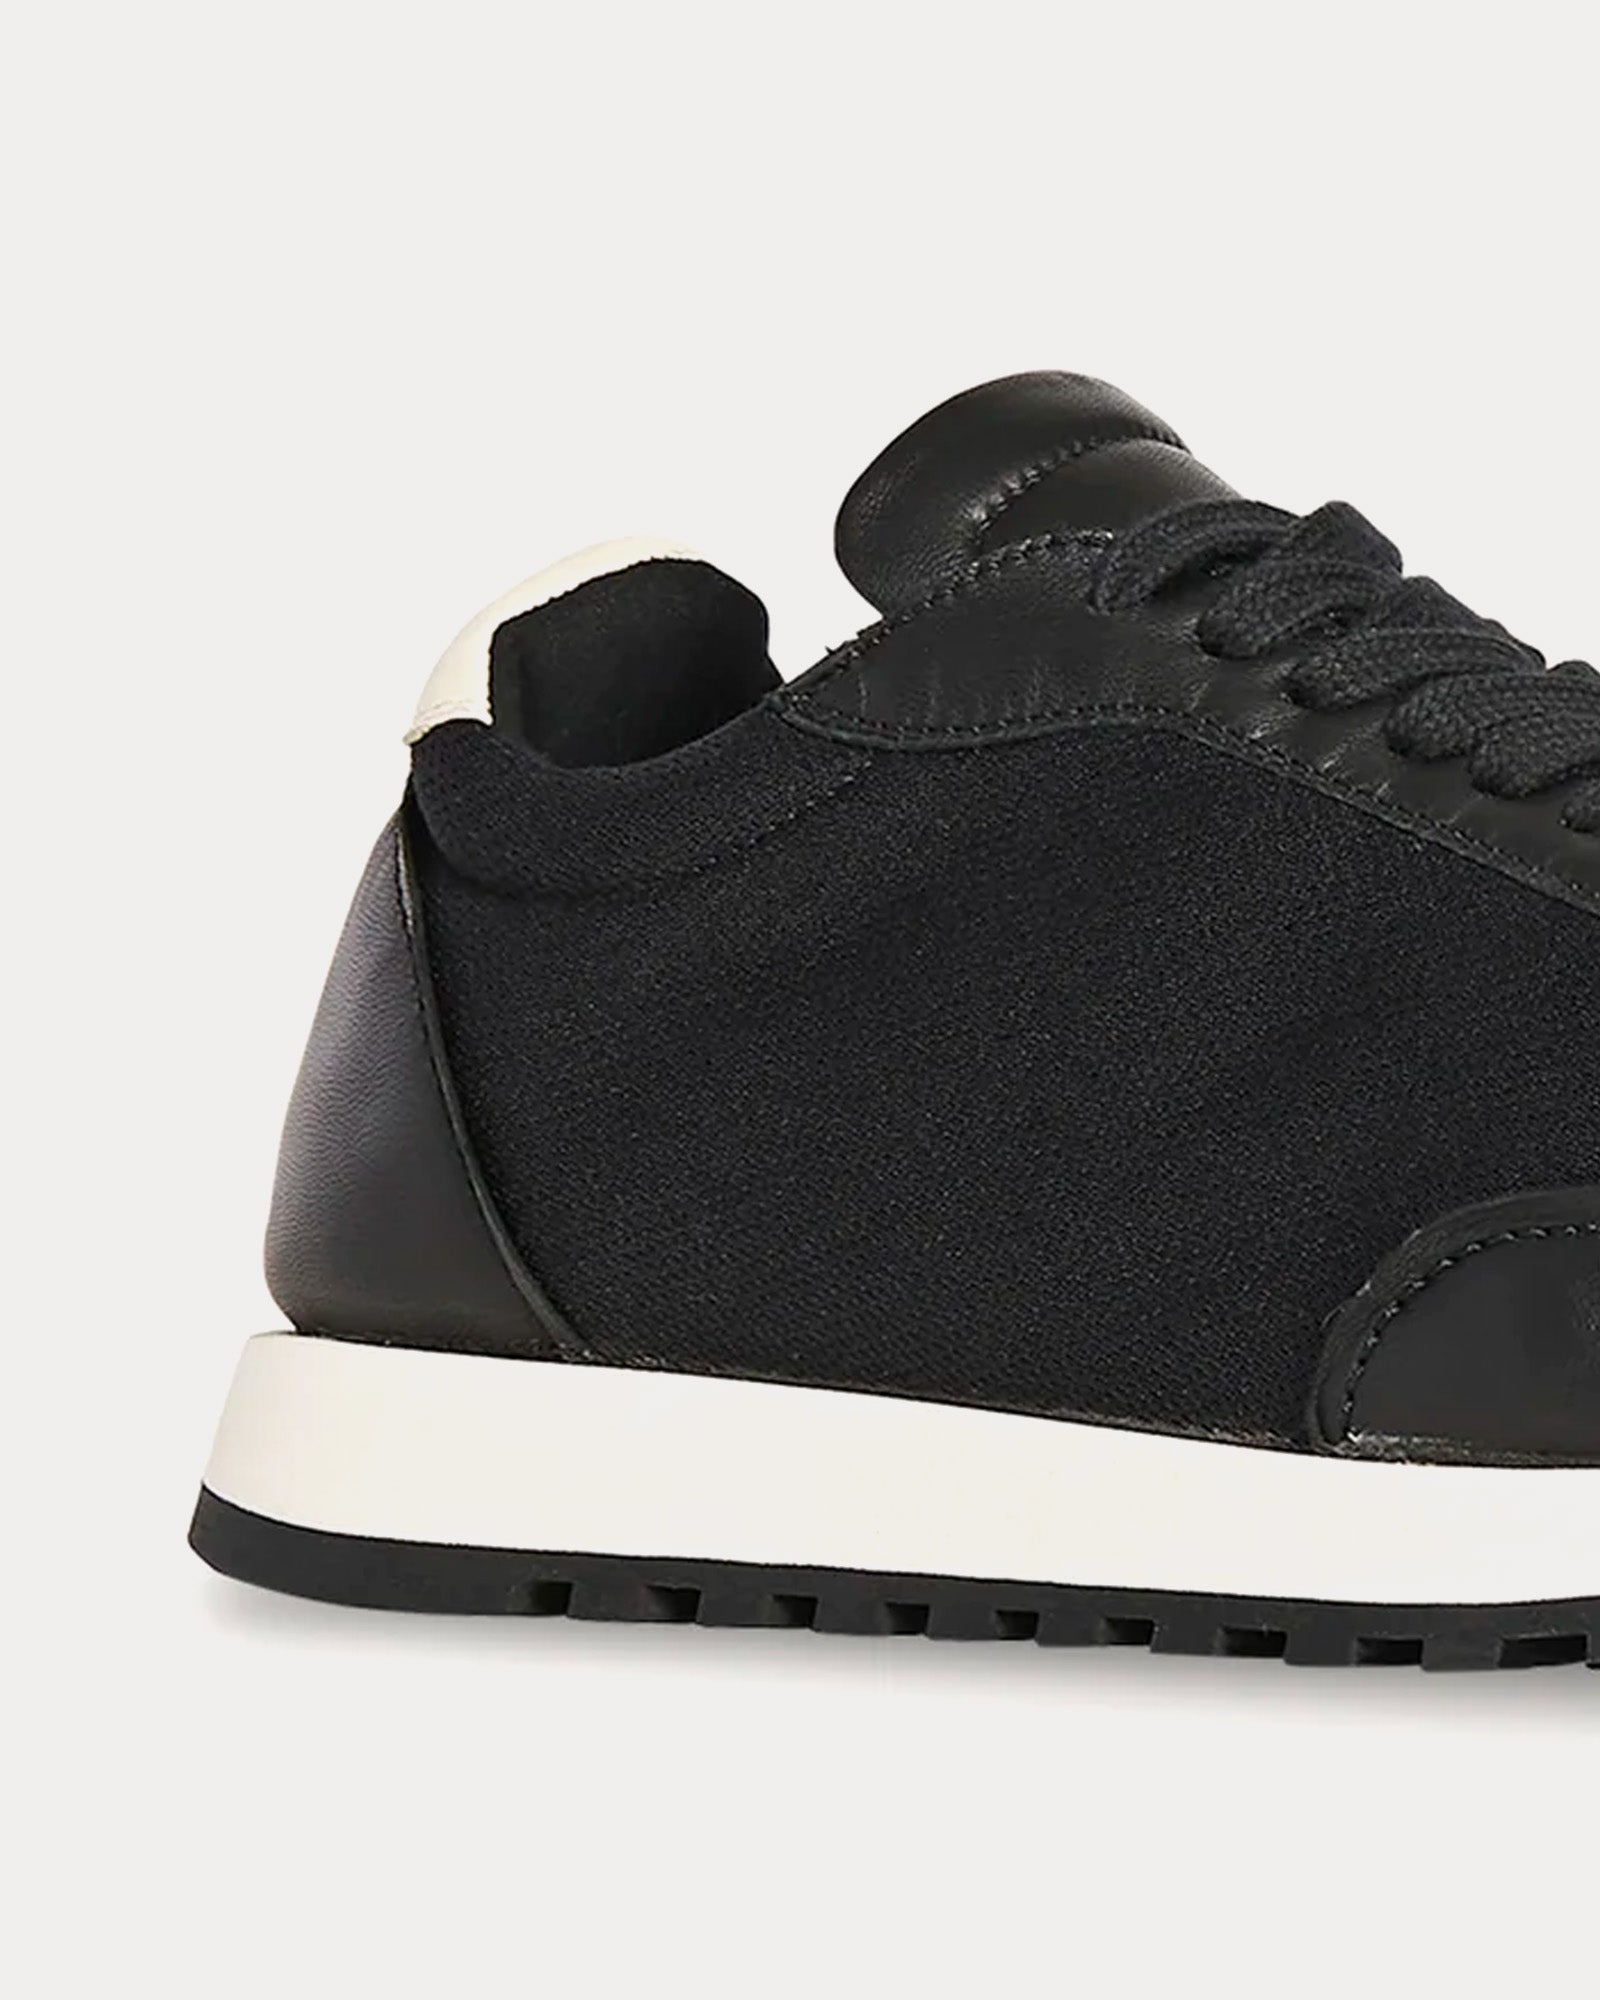 The Row - Owen Runner Leather & Nylon Black / White / Black Low Top Sneakers